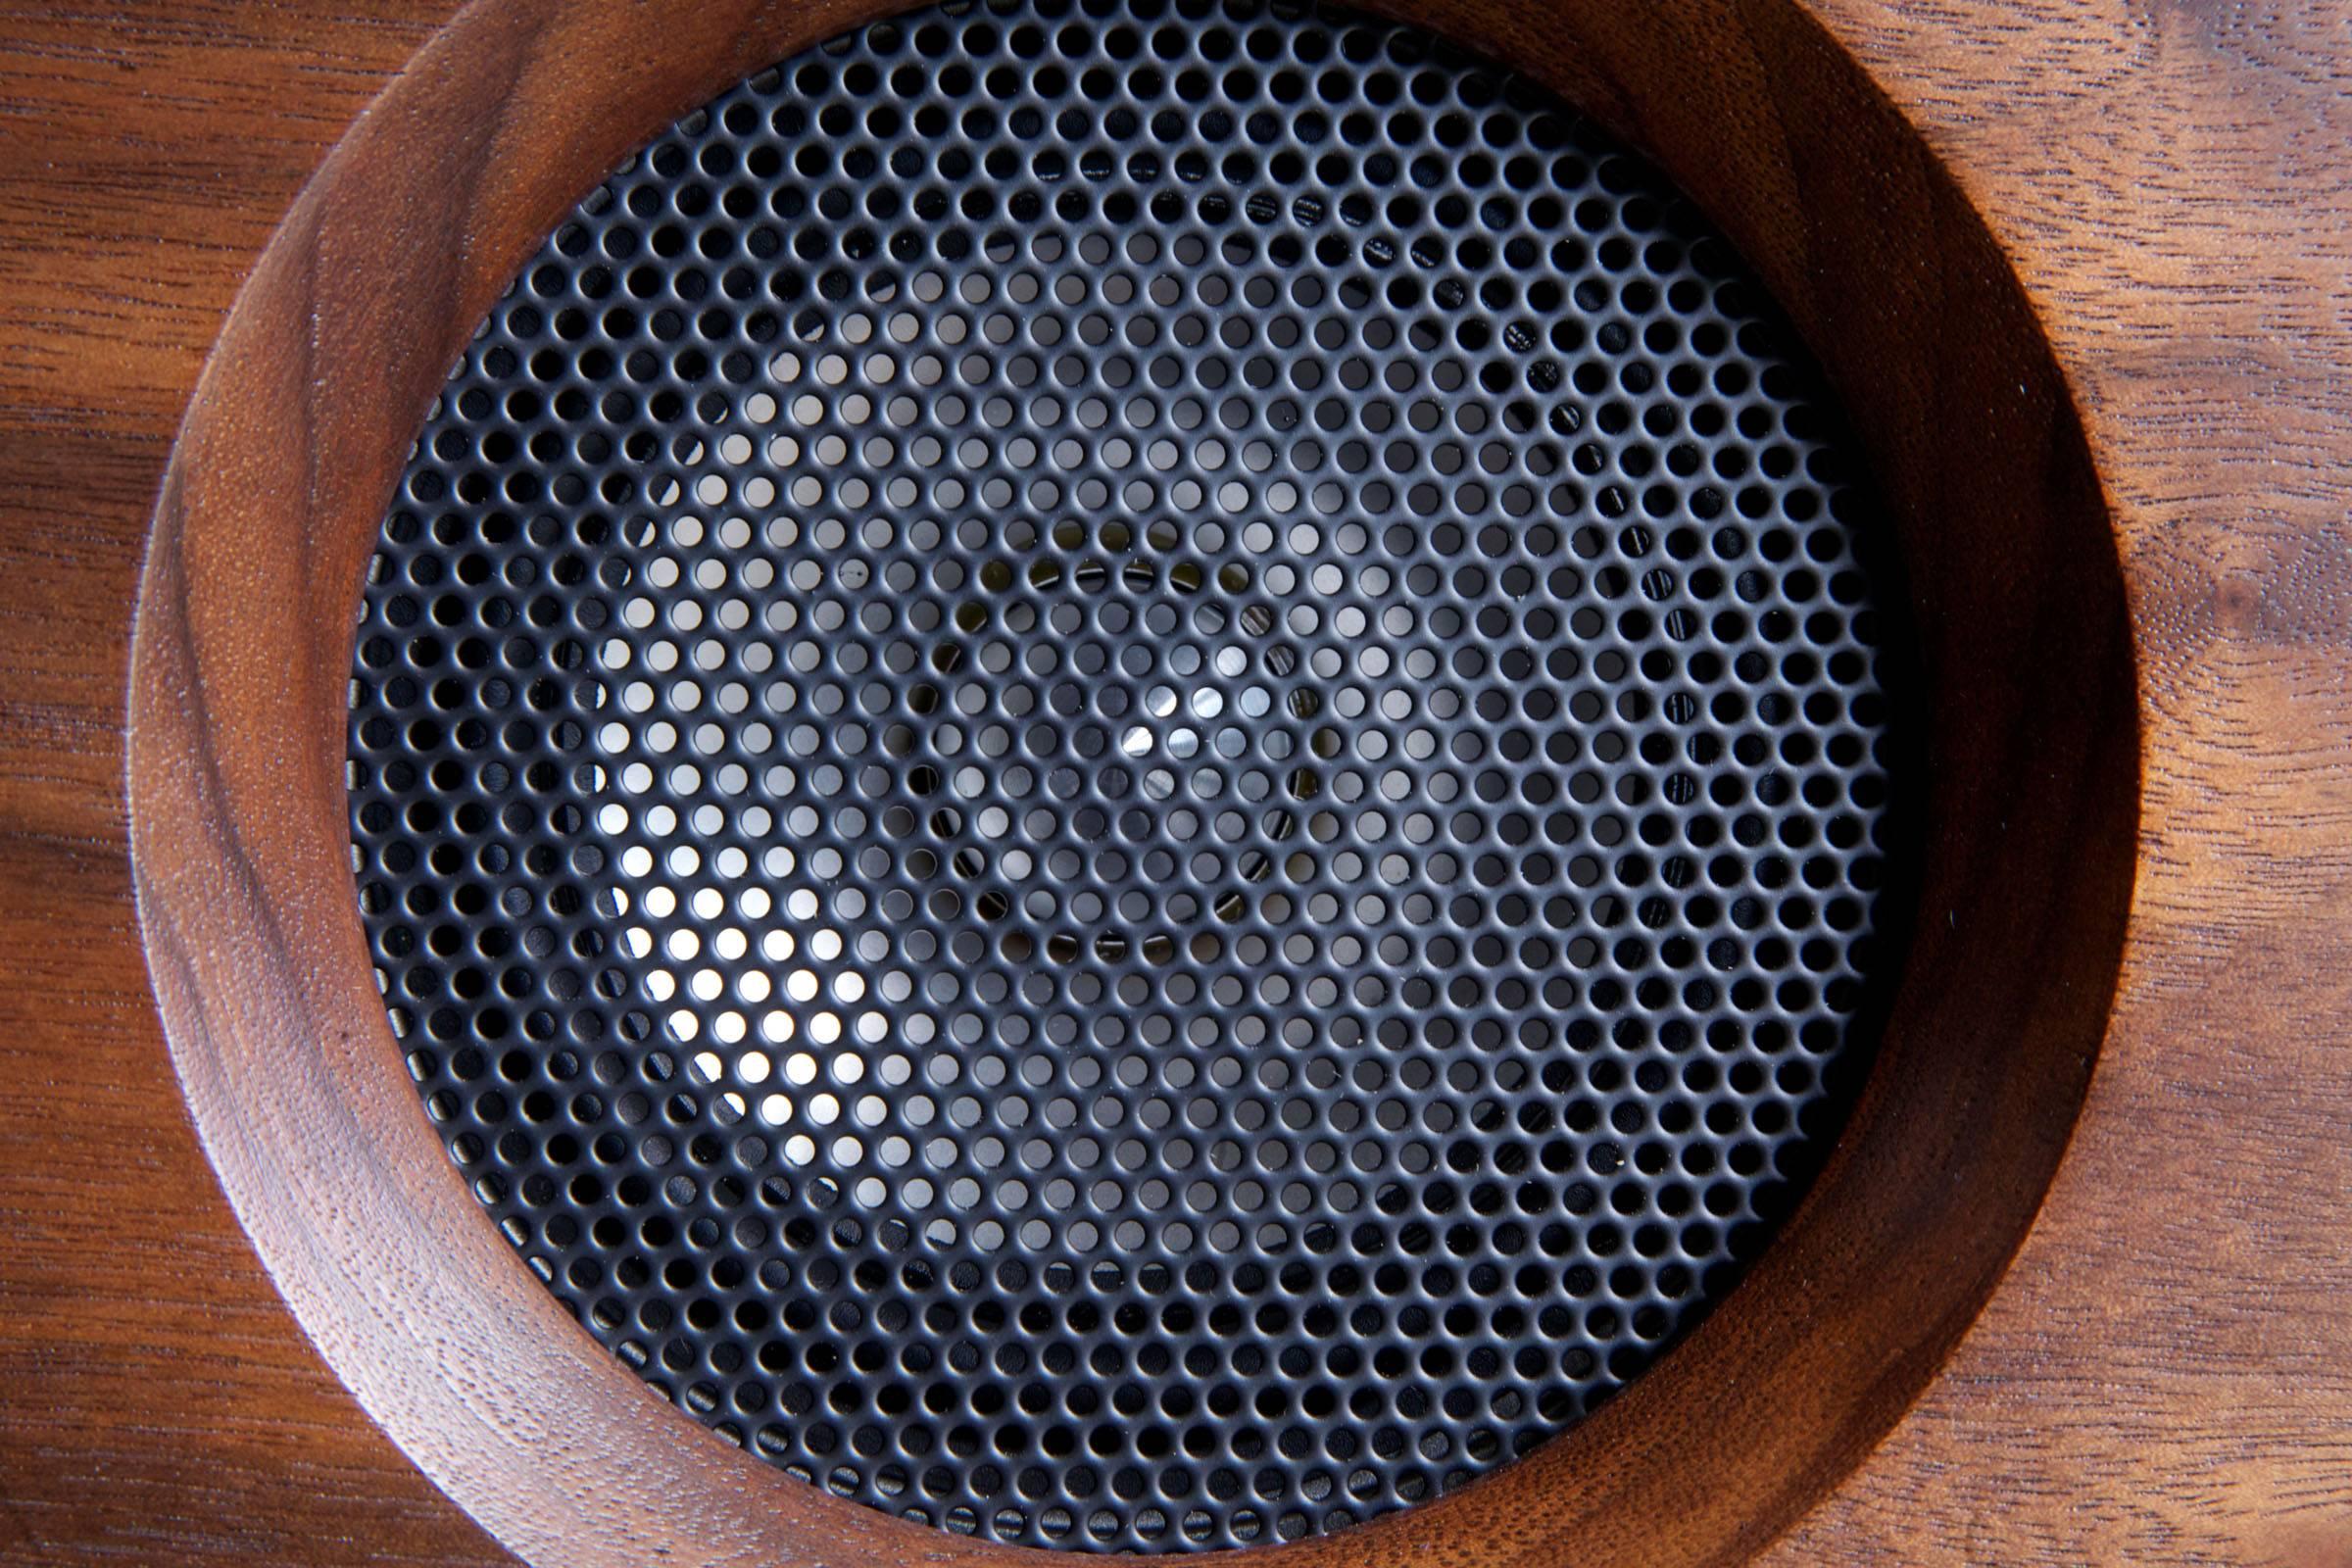 Tabletop HiFi Speaker Glacier White Cabinet with Natural Walnut Speaker Front 5